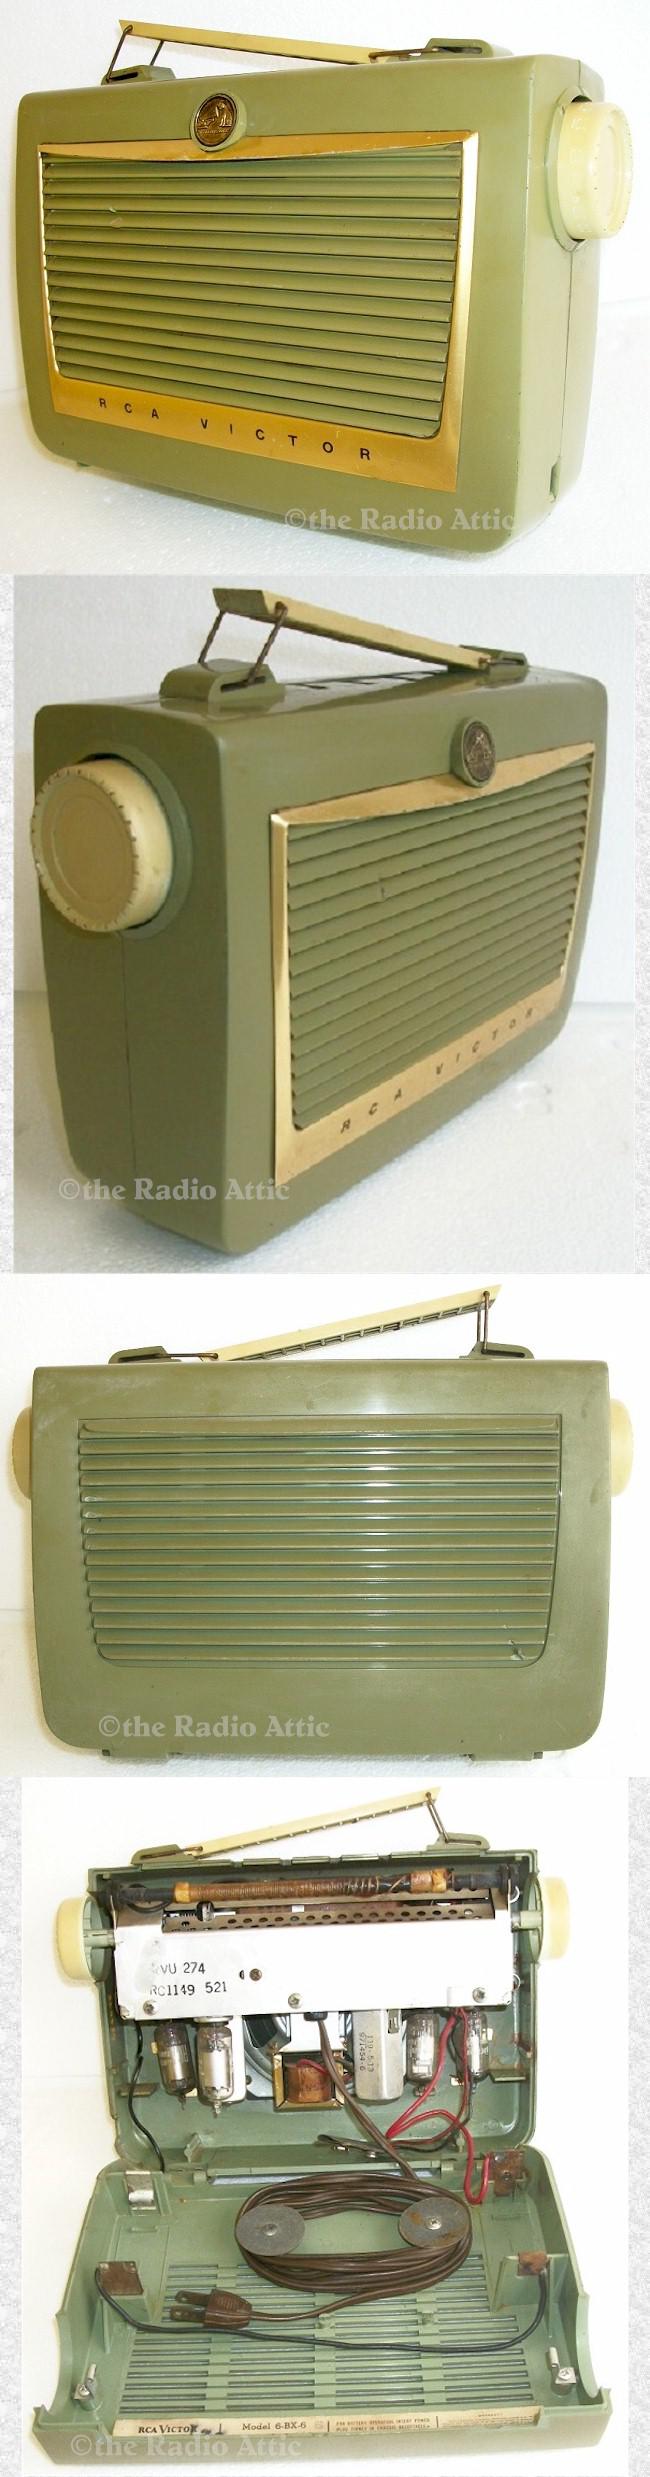 RCA 6BX-6 Portable (1946)